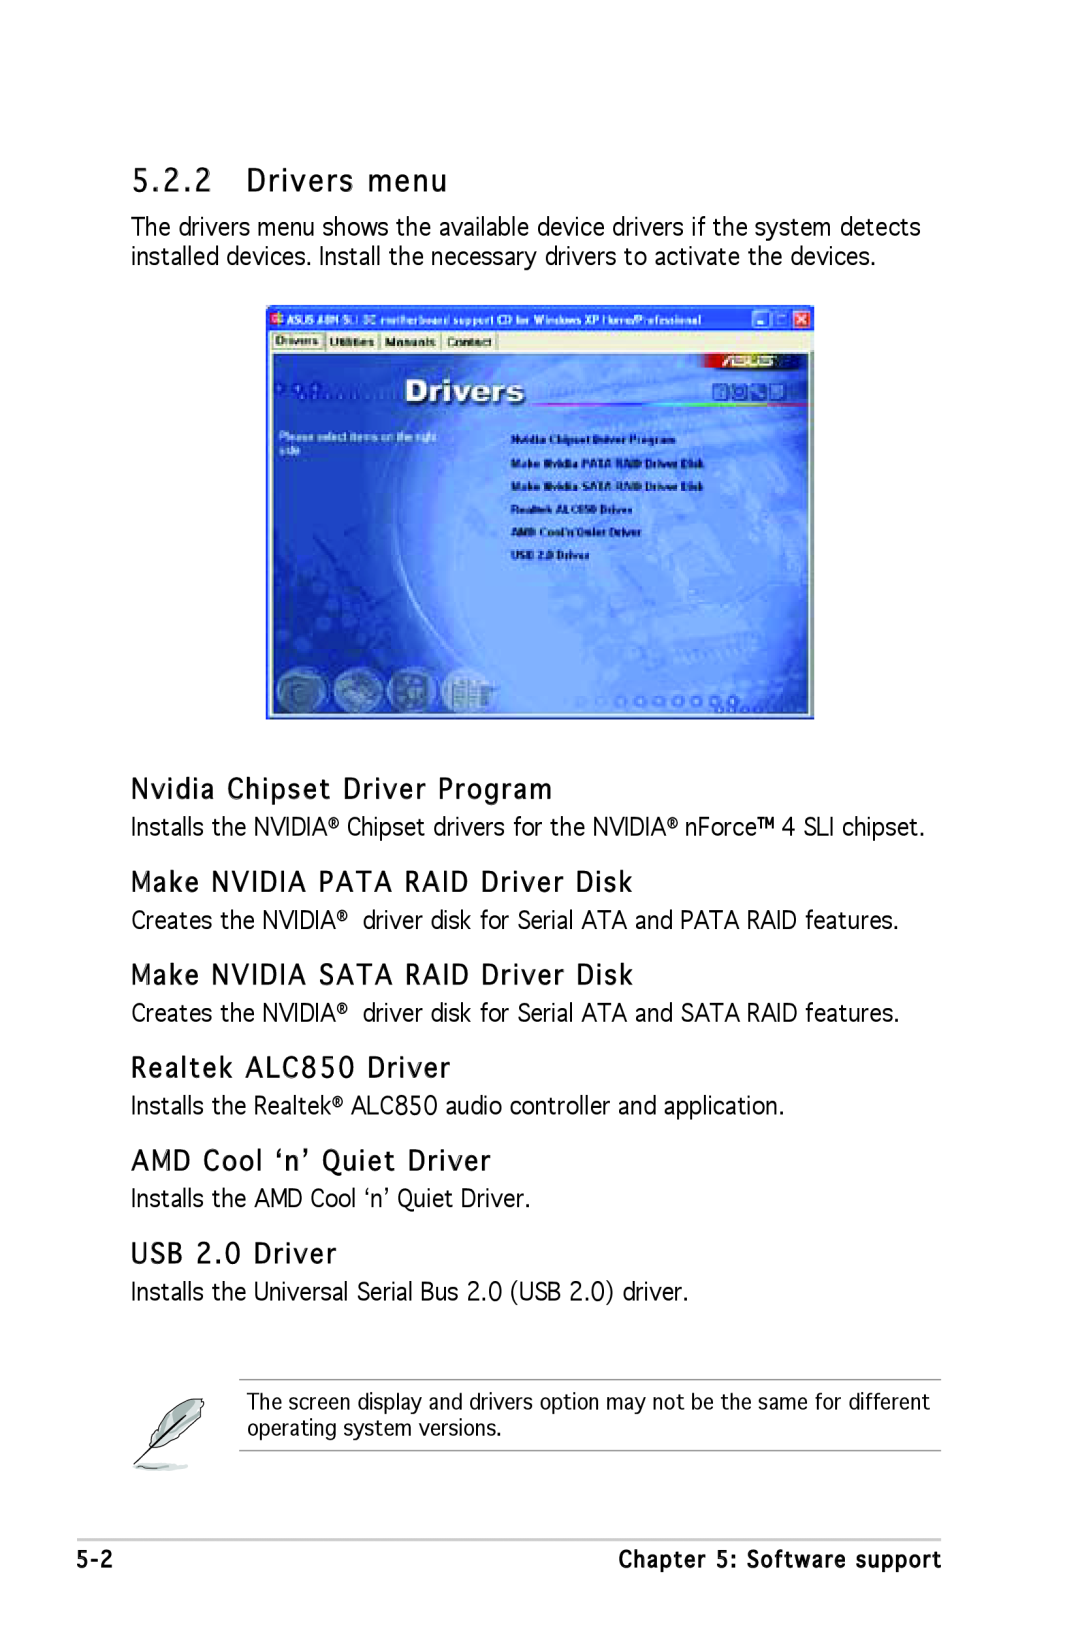 Asus A8N-SLI SE Drivers menu, Nvidia Chipset Driver Program, Make NVIDIA PATA RAID Driver Disk, Realtek ALC850 Driver 